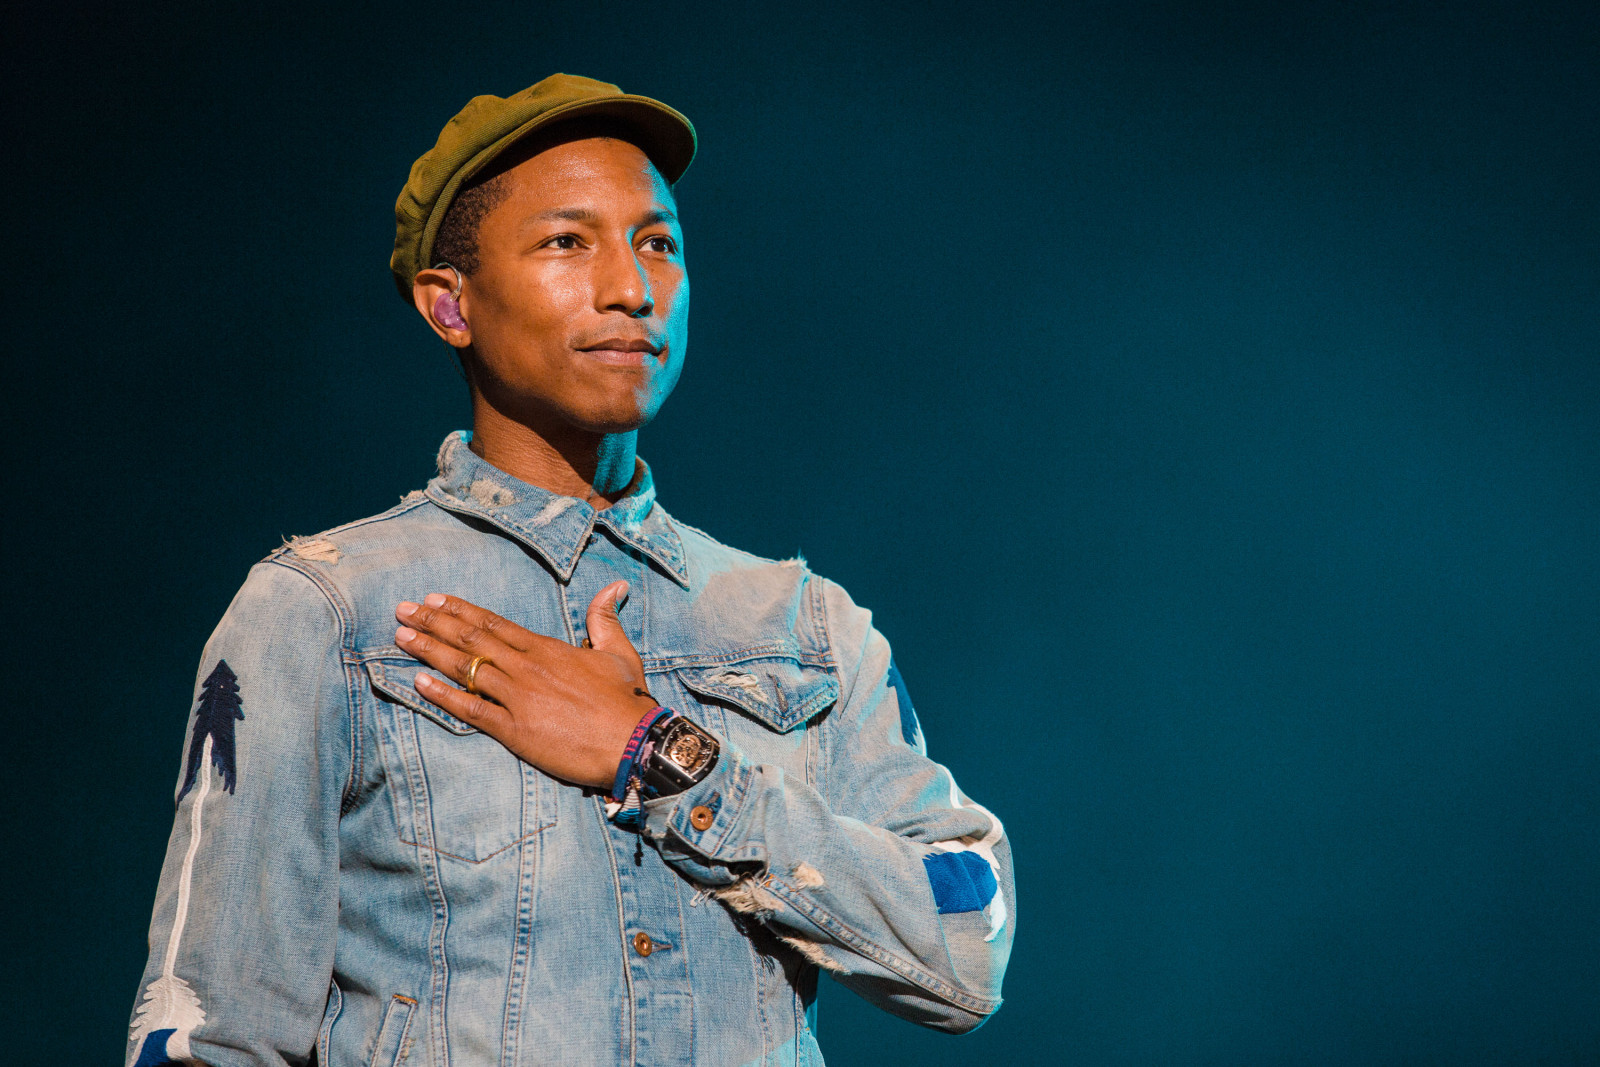 Pharrell x Louis Vuitton — Let the Church Say Amen, Article